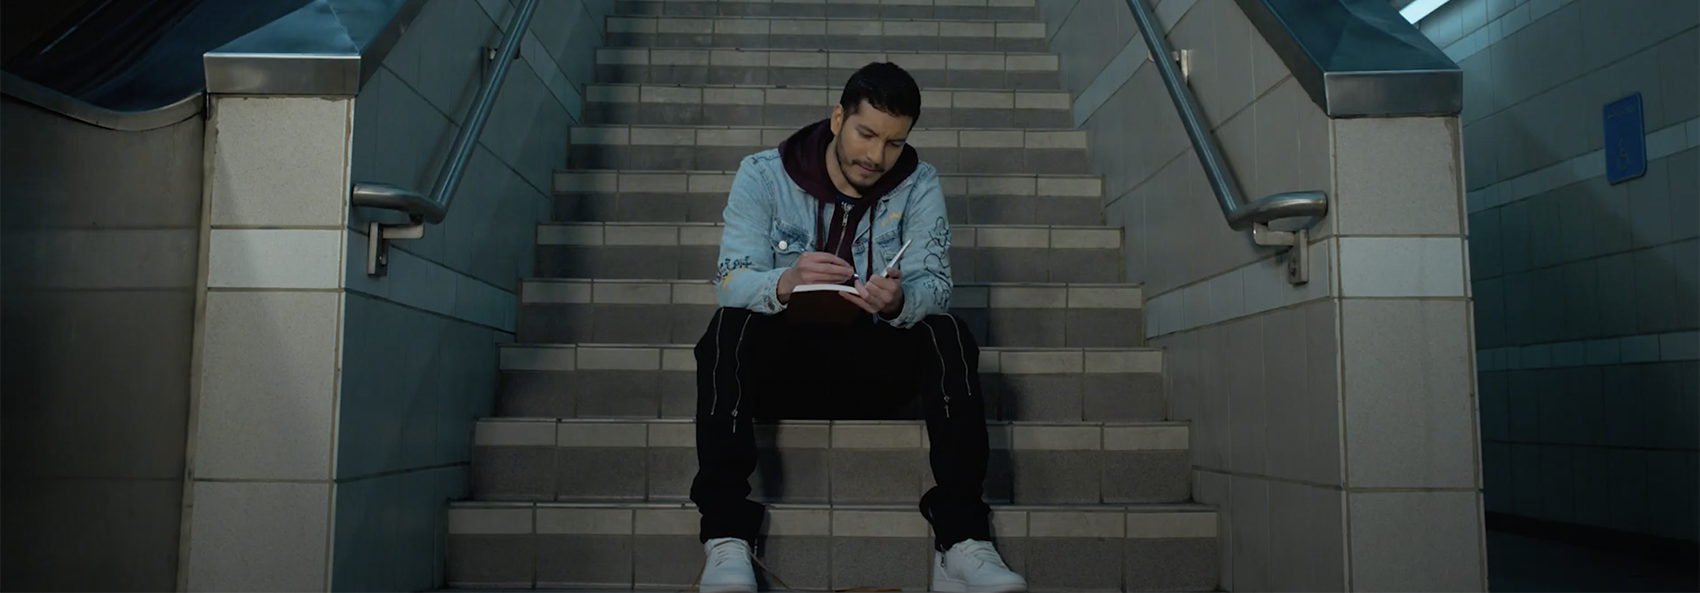 man sitting on stairs writing diary